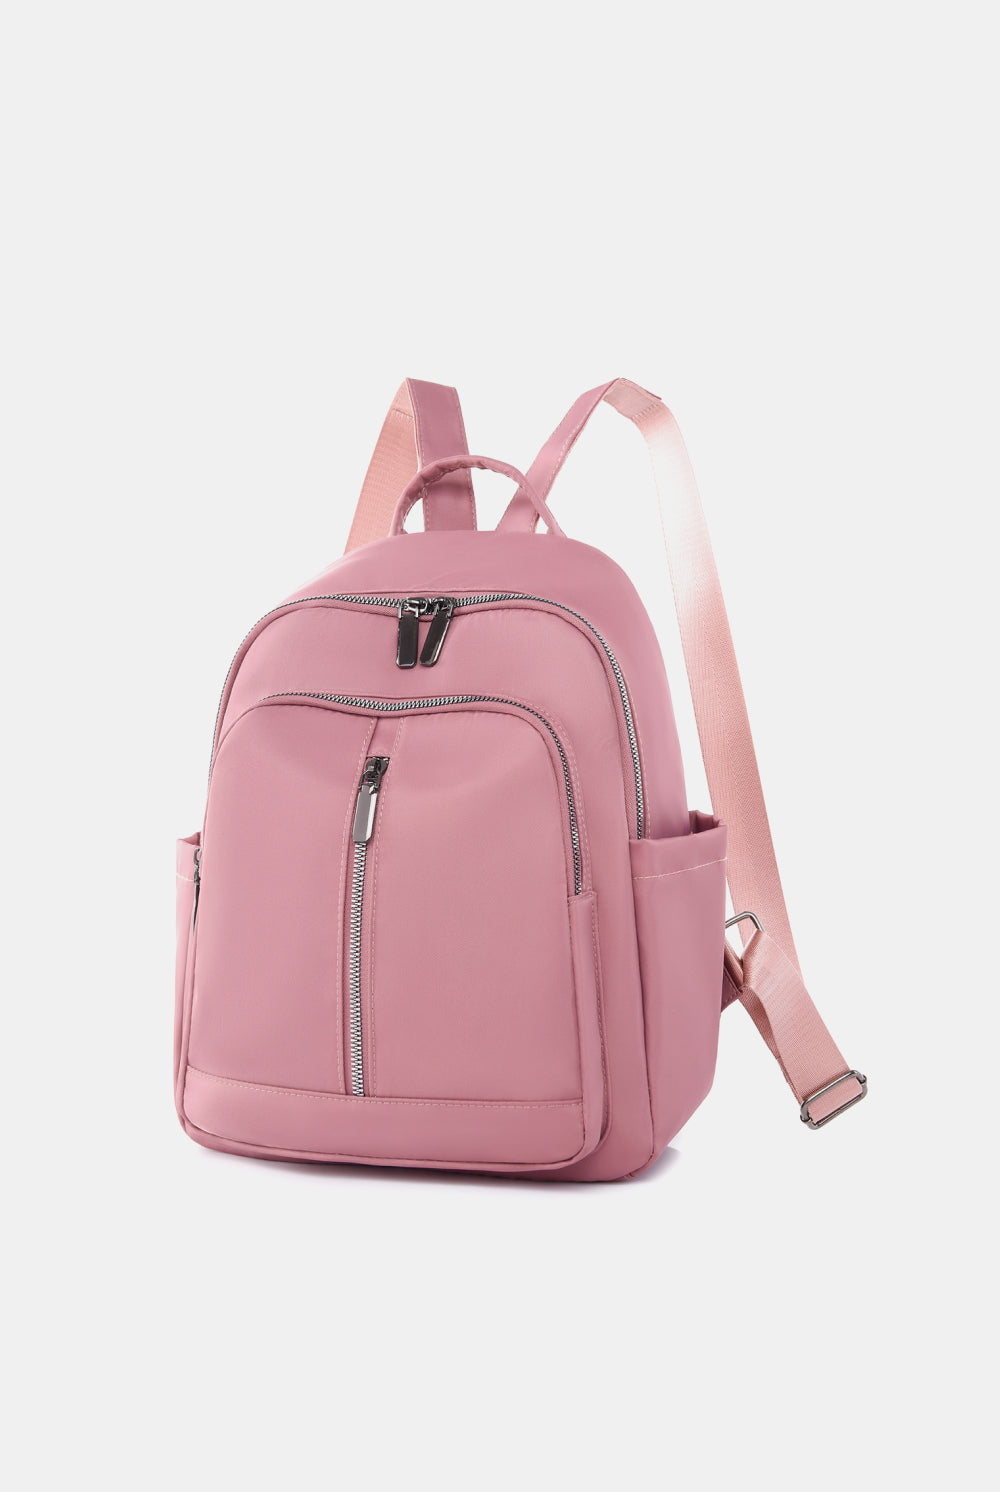 Misty Rose Flawless Medium Nylon Backpack Handbags